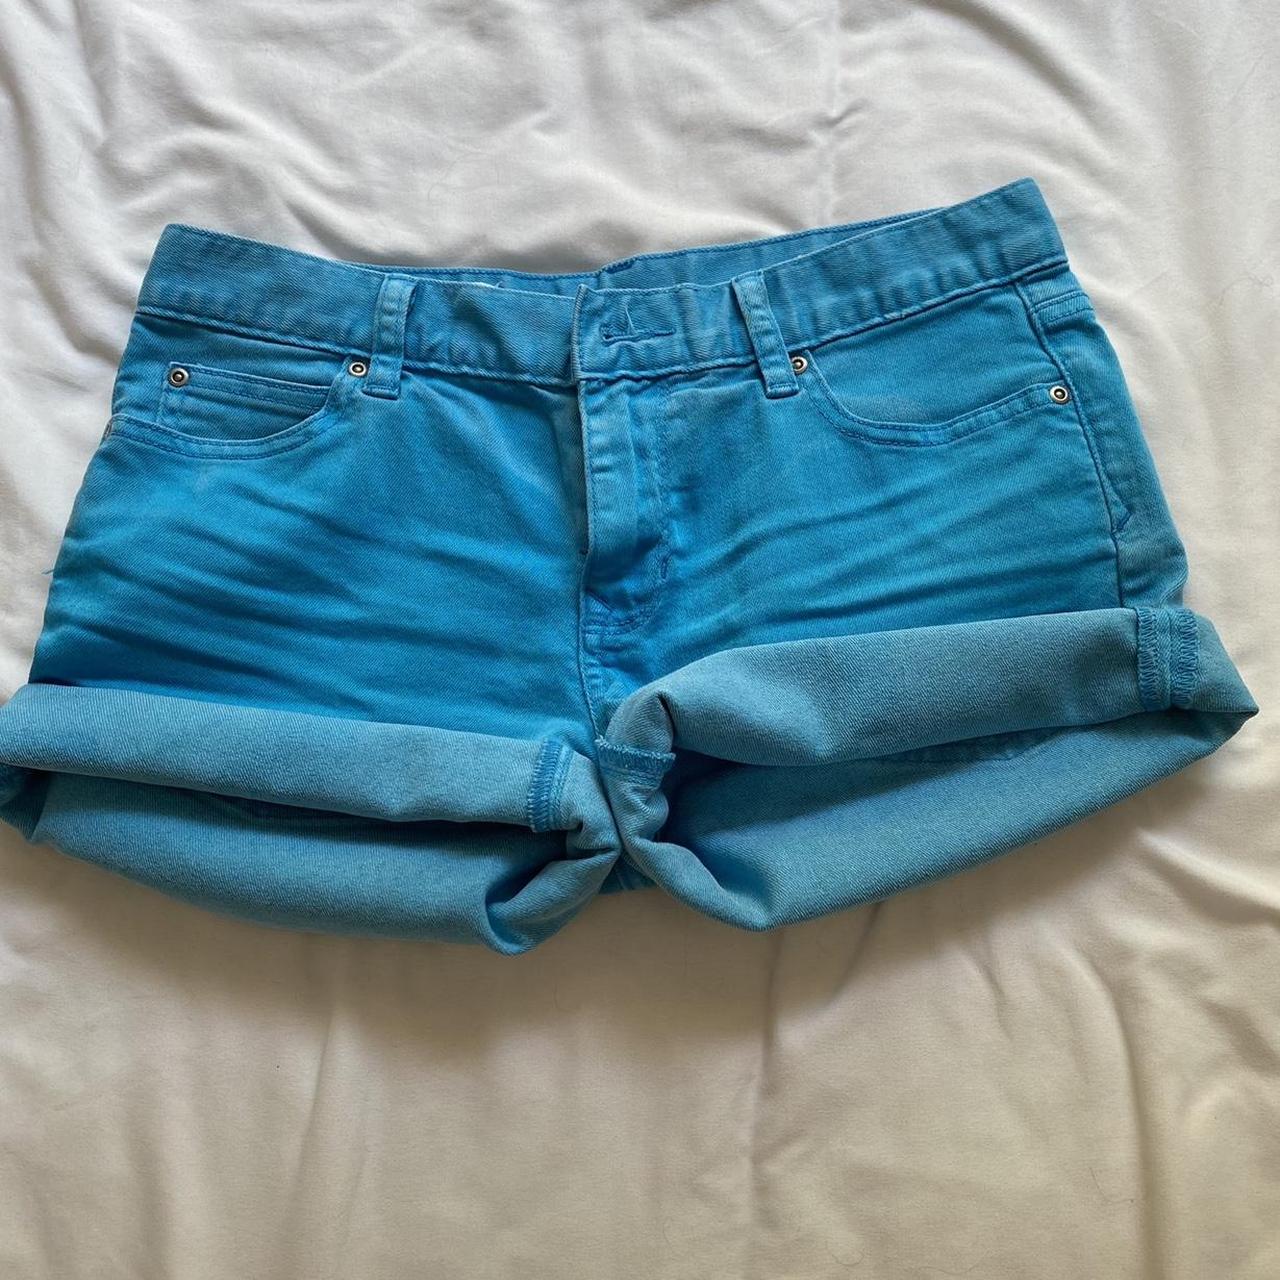 Product Image 3 - 🌐 Bright Blue Gap Shorts